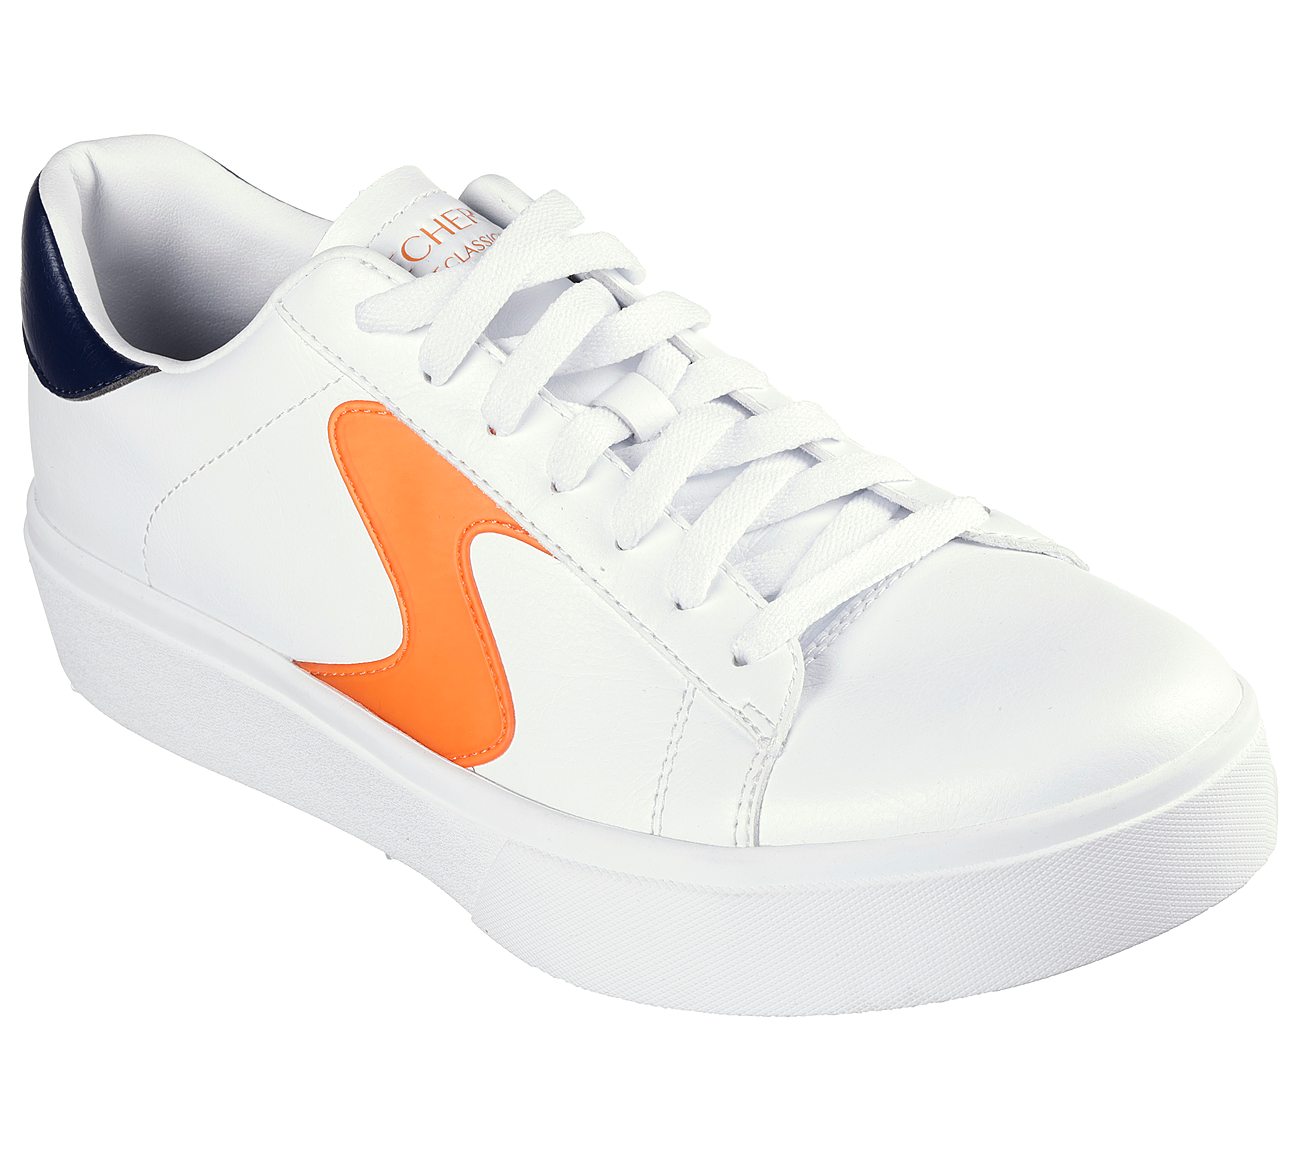 EDEN LX - REMEMBRANCE, WHITE ORANGE Footwear Right View